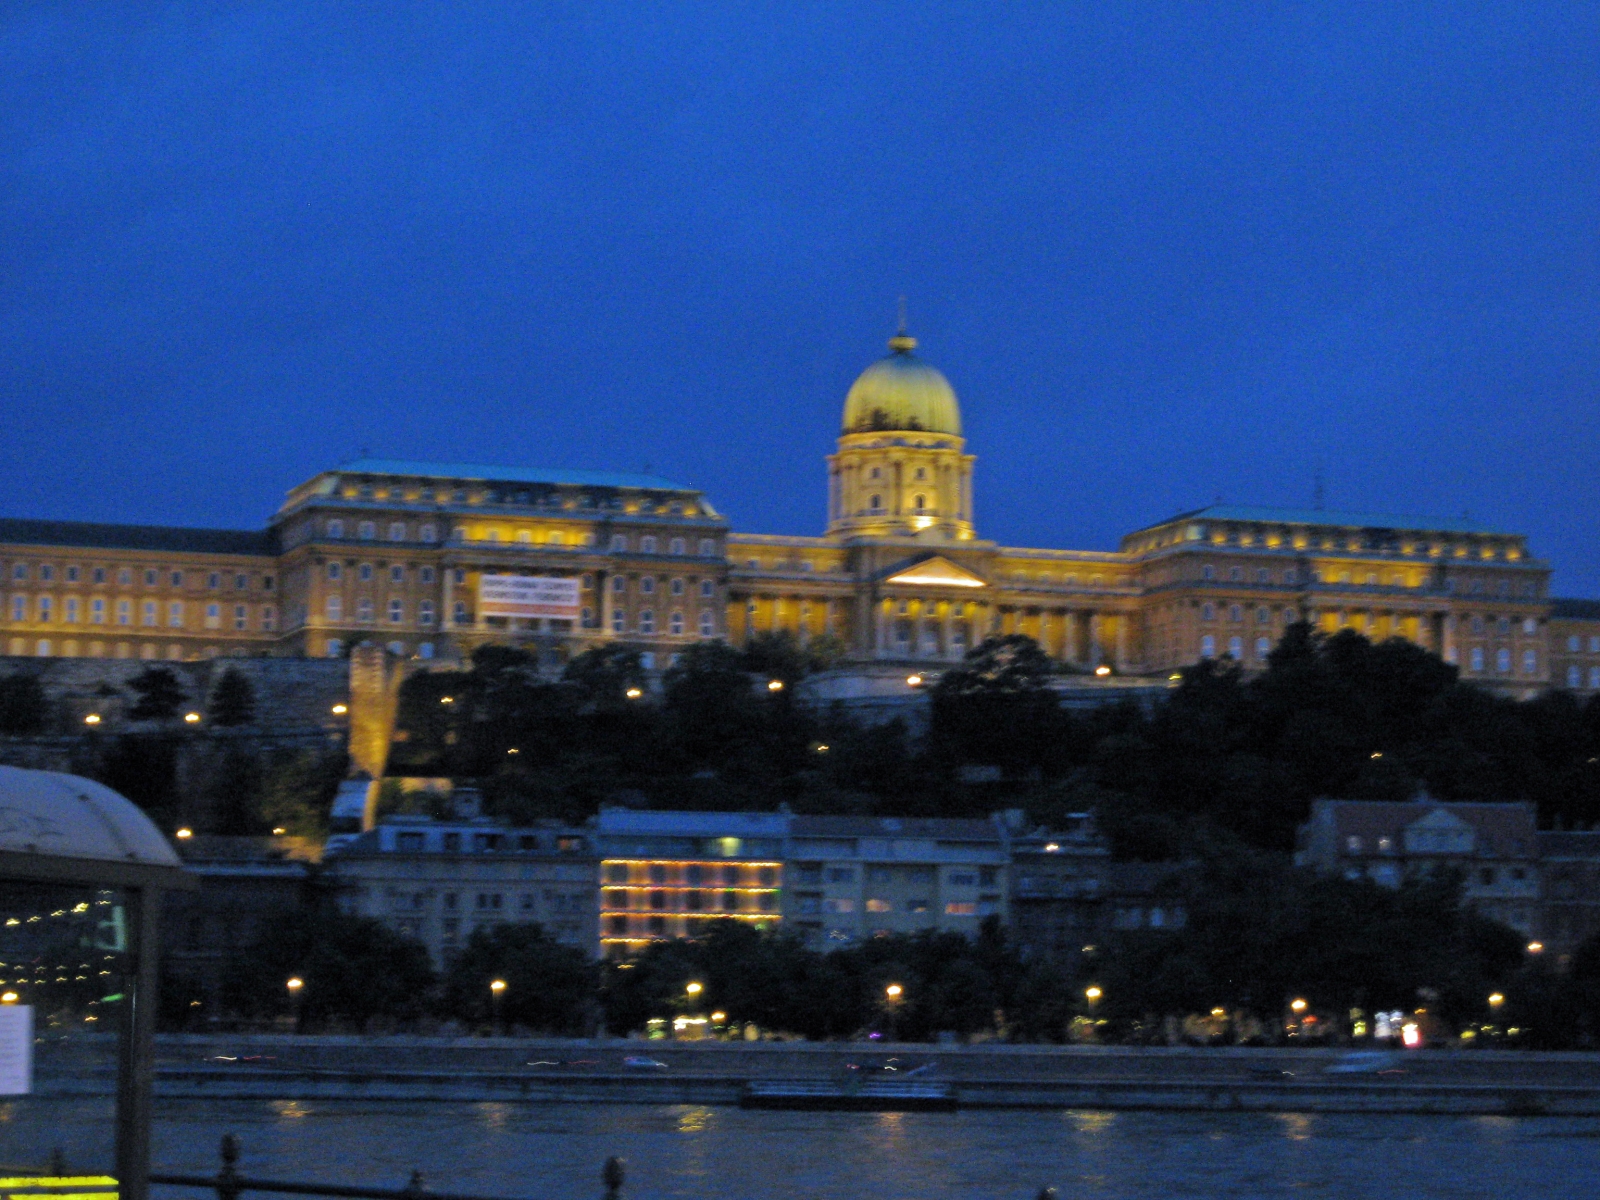 Buda Castle at night, Budapest, Hungary